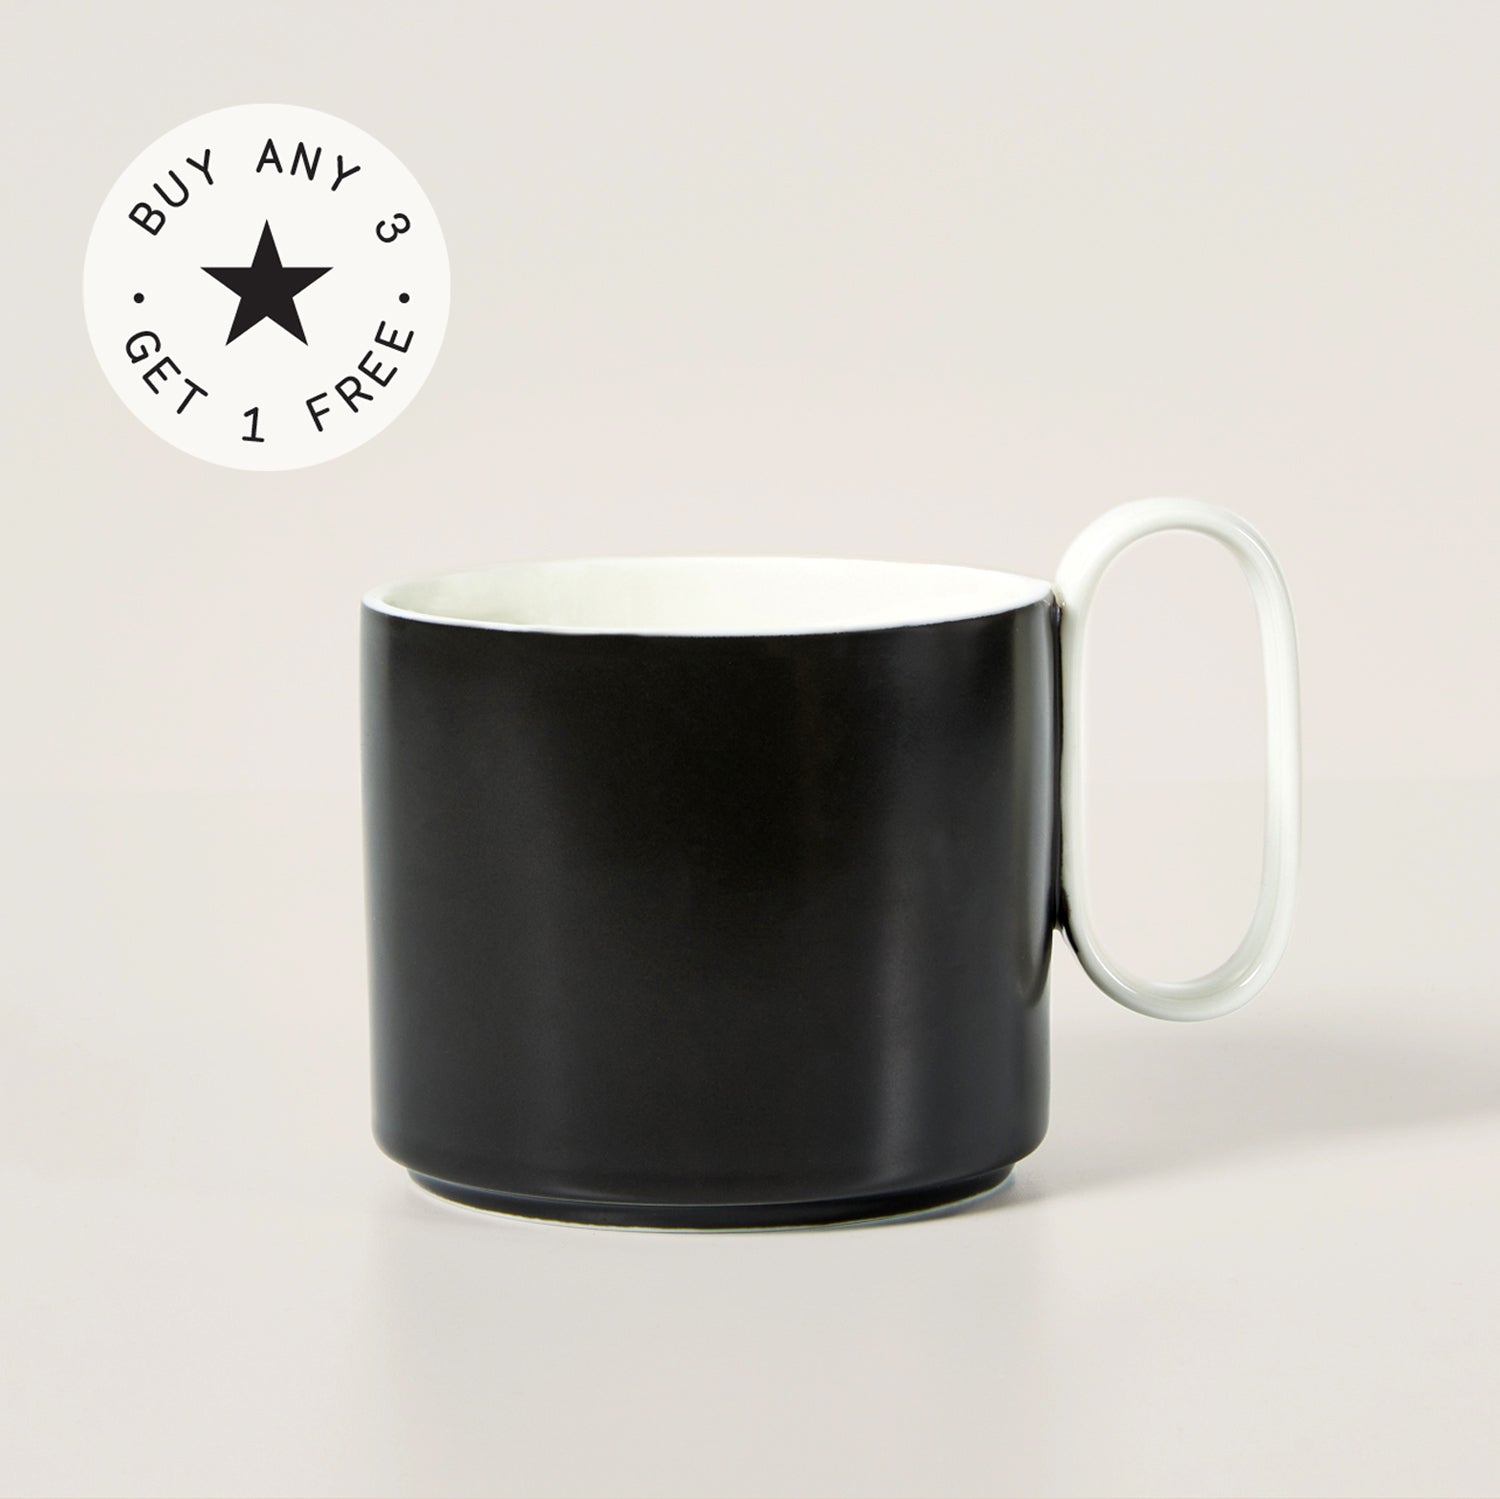 Never Enough Tea - Travel mug with a handle